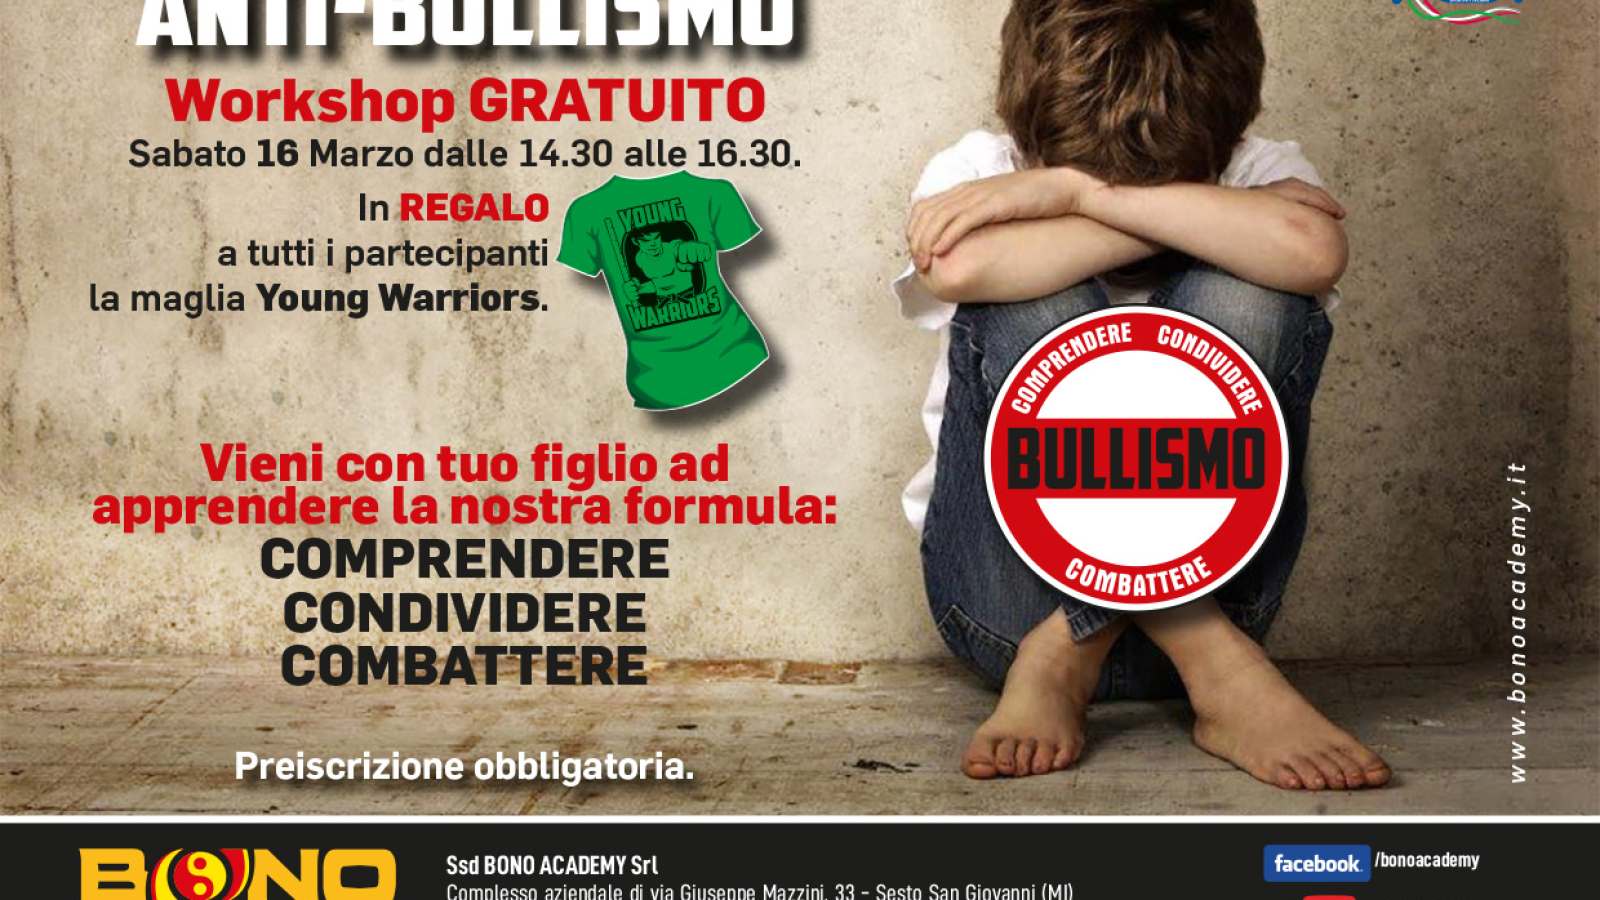 Volantino AntiBullismo solo workshop marzo 2019